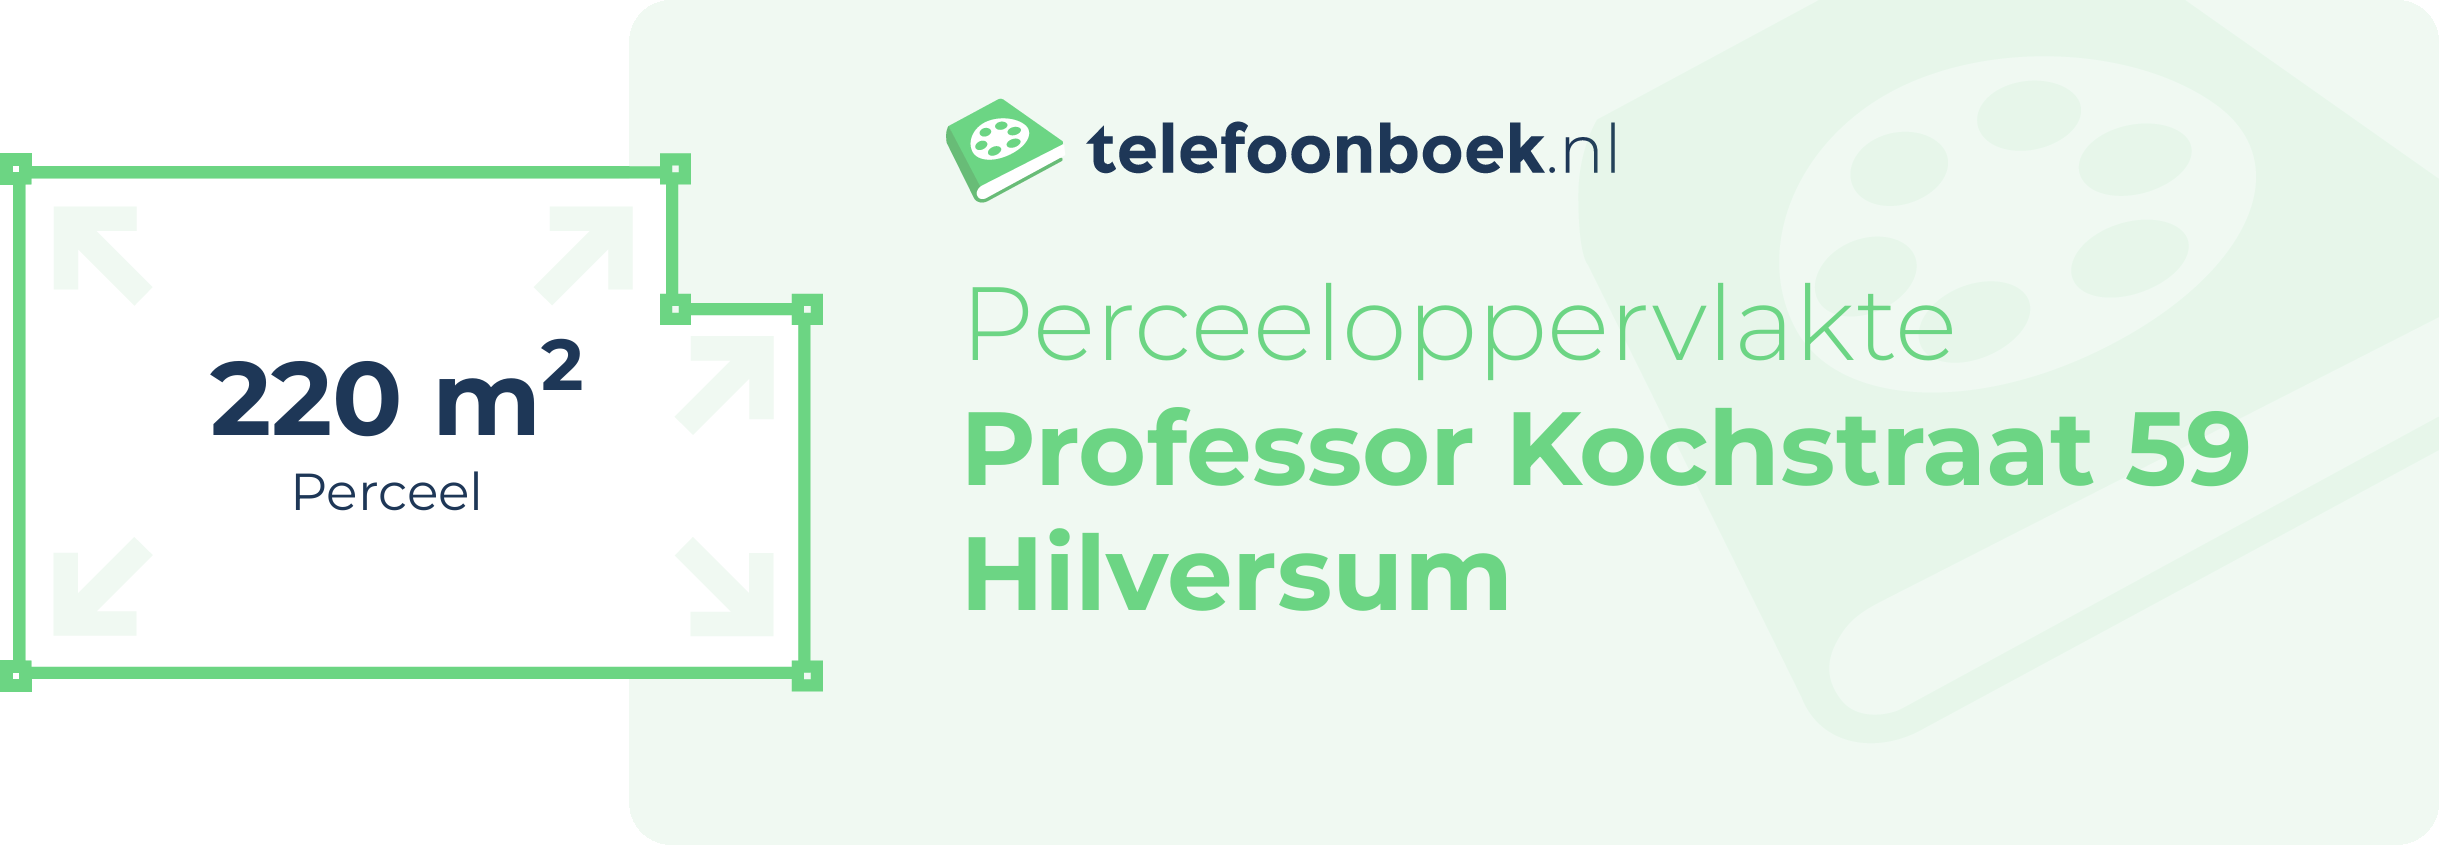 Perceeloppervlakte Professor Kochstraat 59 Hilversum